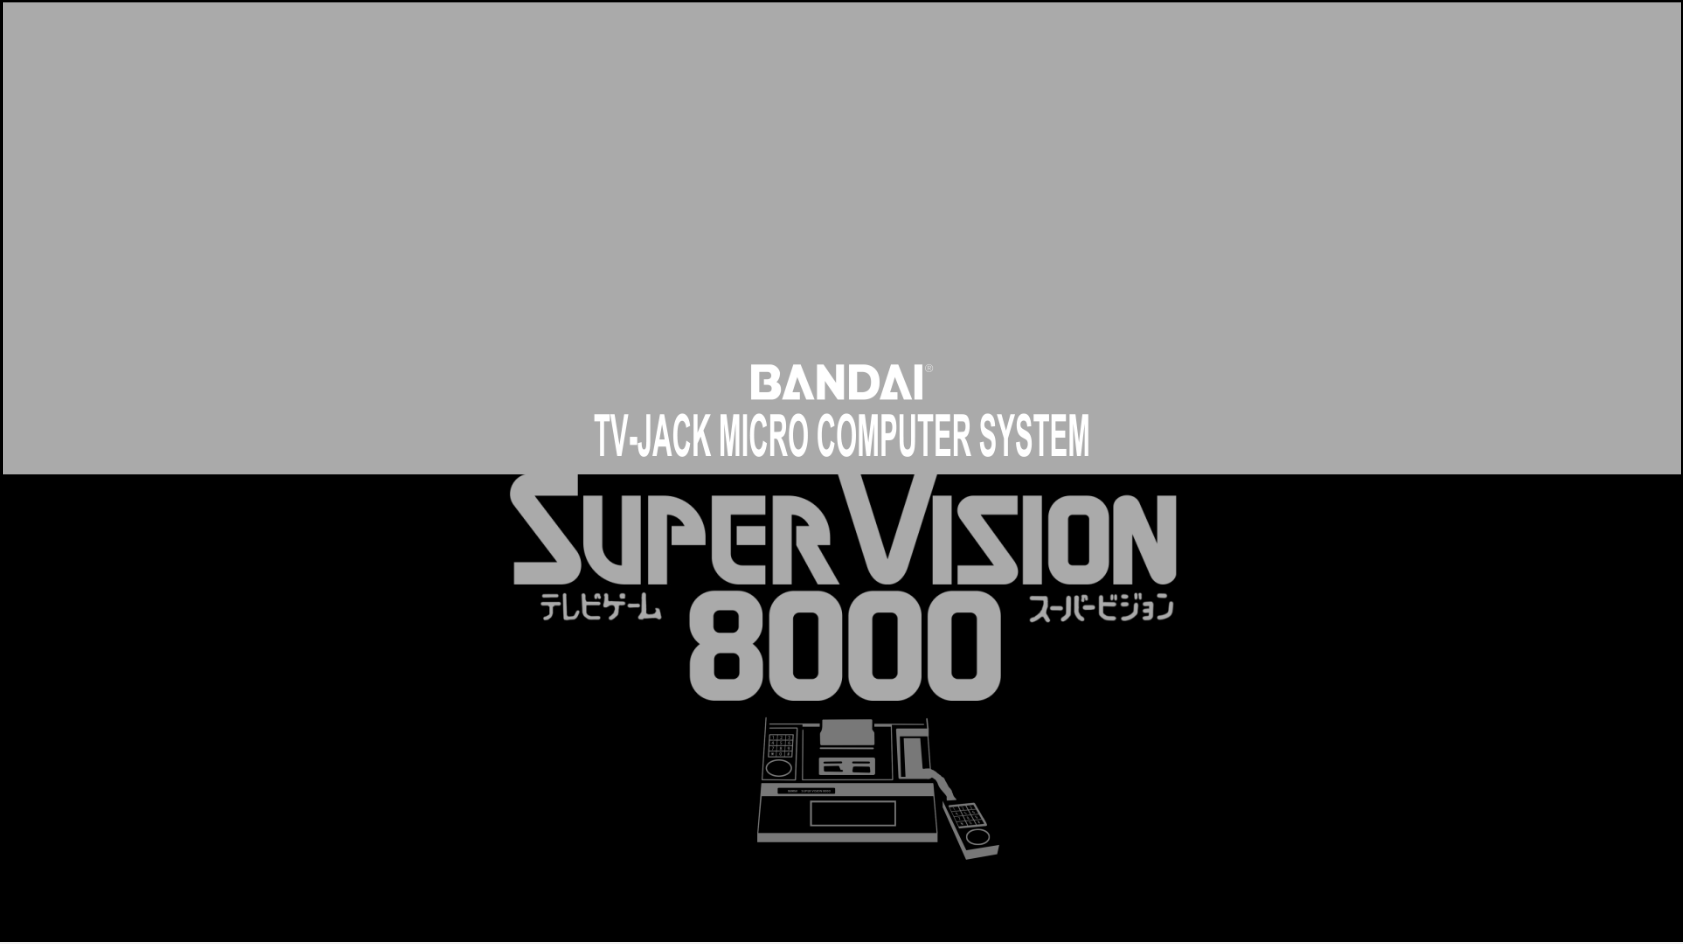 More information about "Bandai SuperVision 8000 Platform Video"